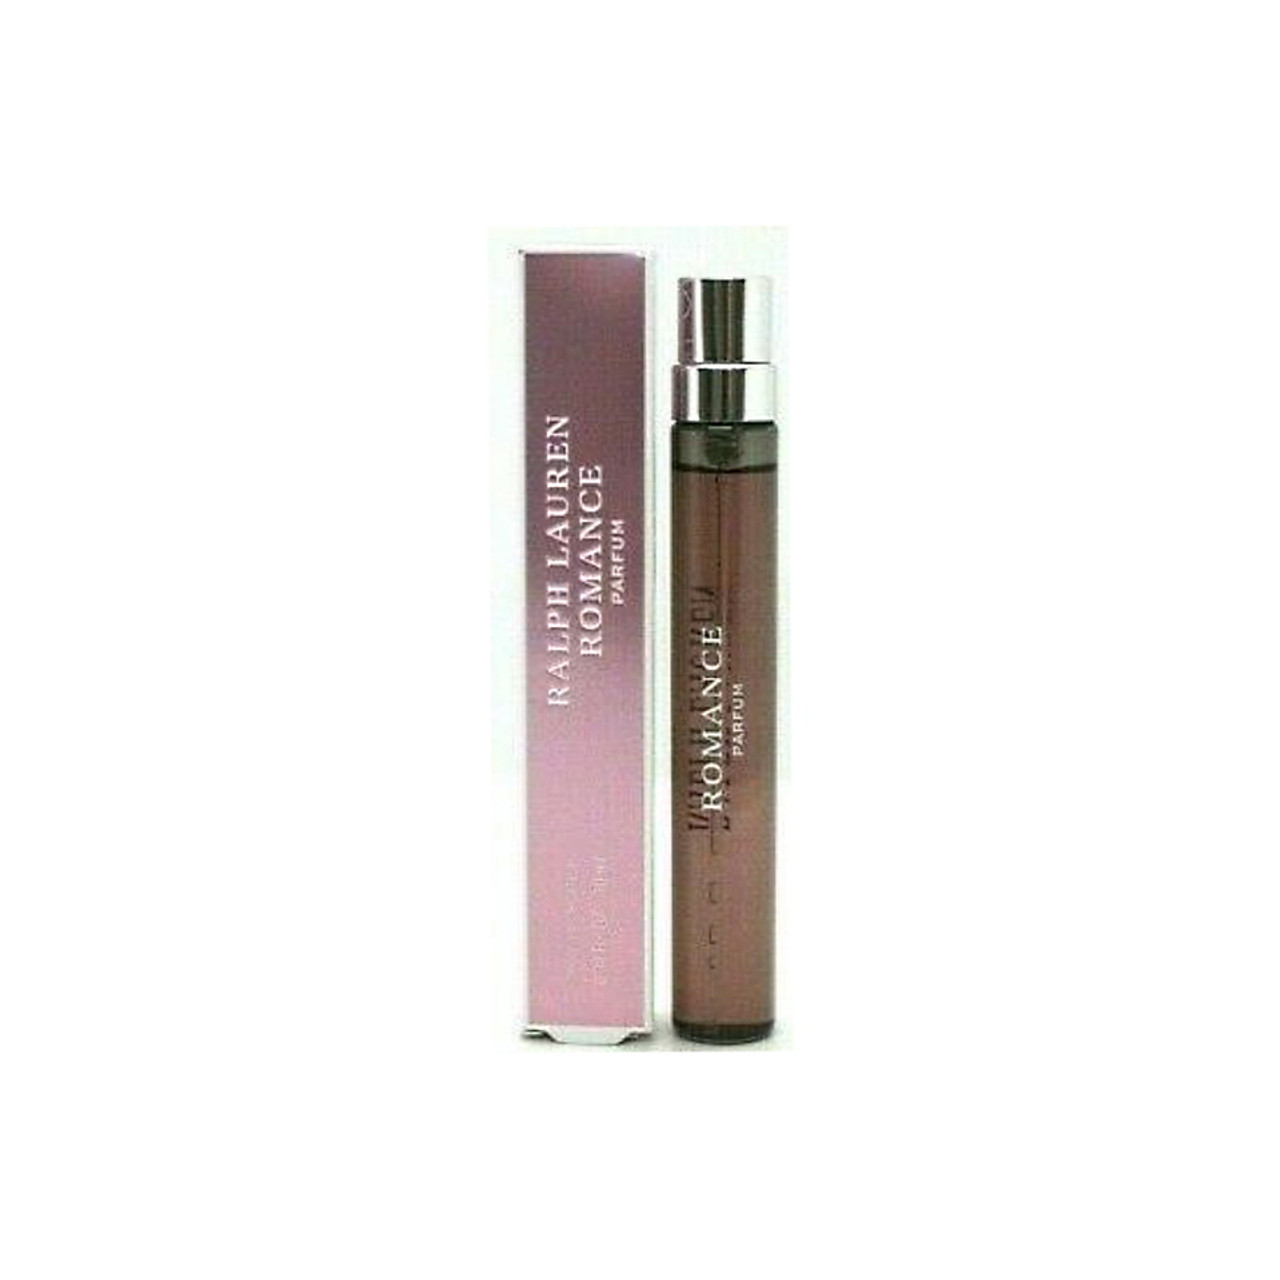 Ralph Lauren Romance Parfum 0.34 oz / 10 ml Spray For Women